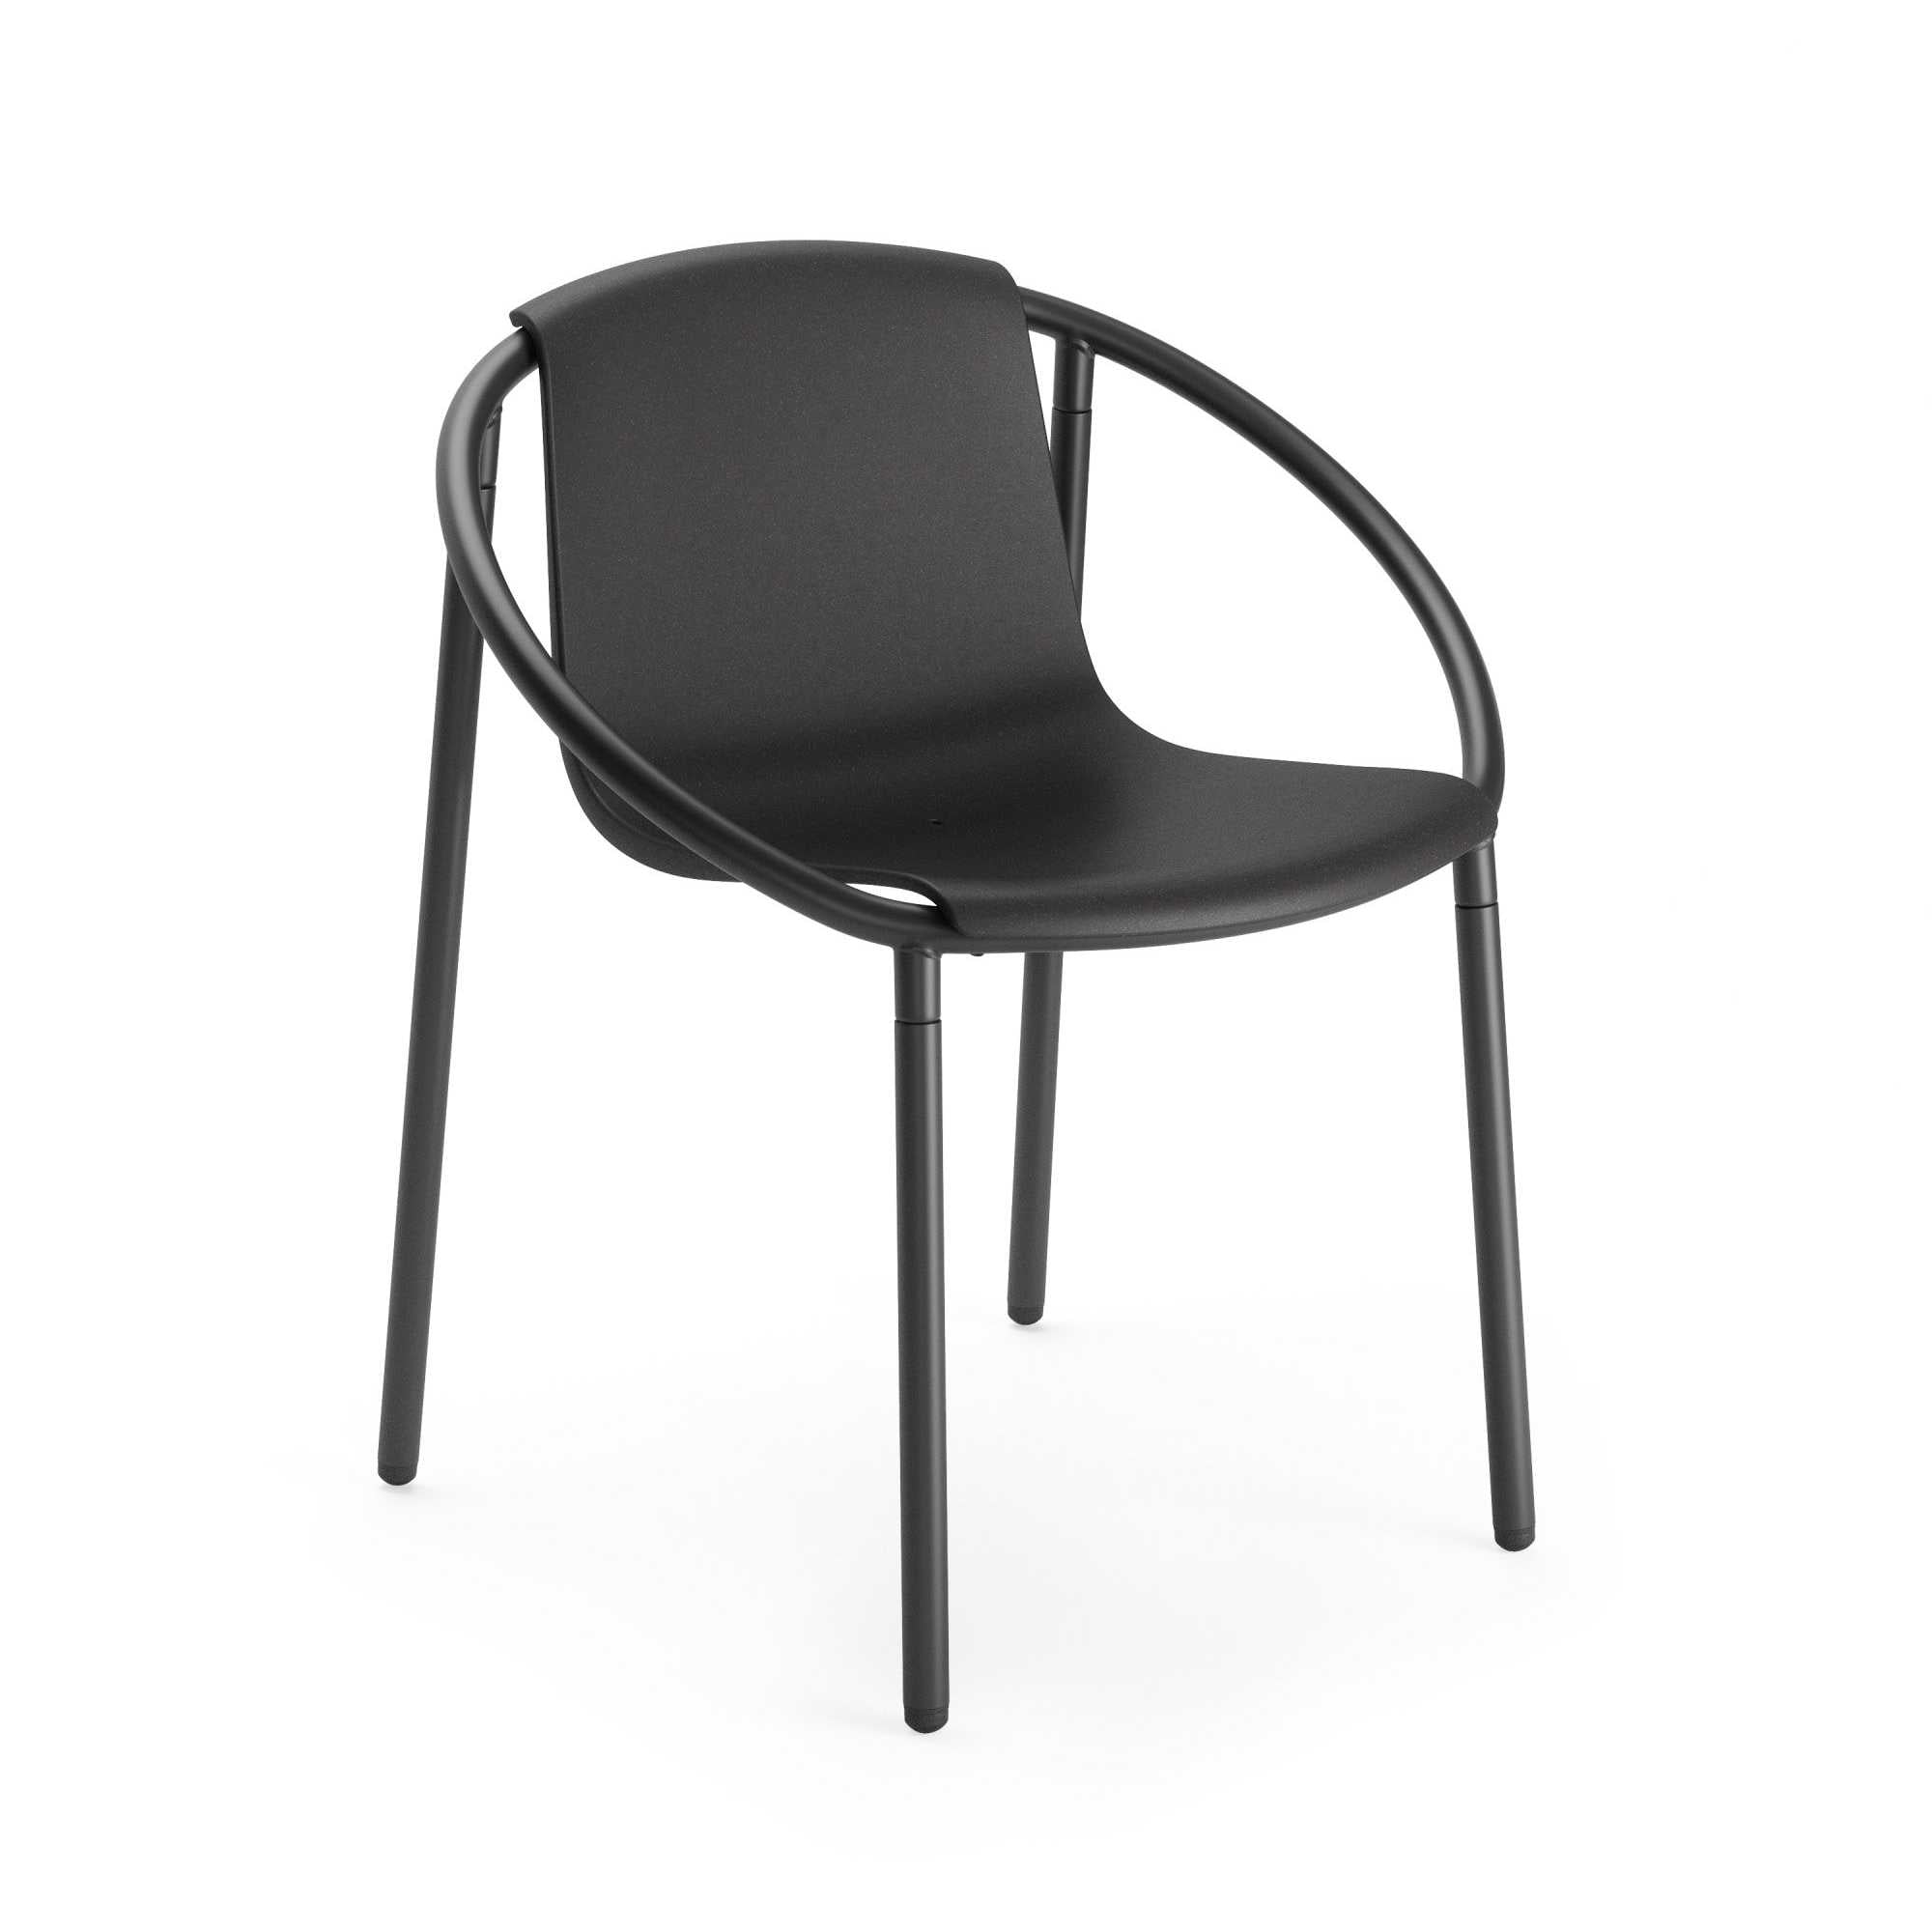 Umbra Ringo chair, black